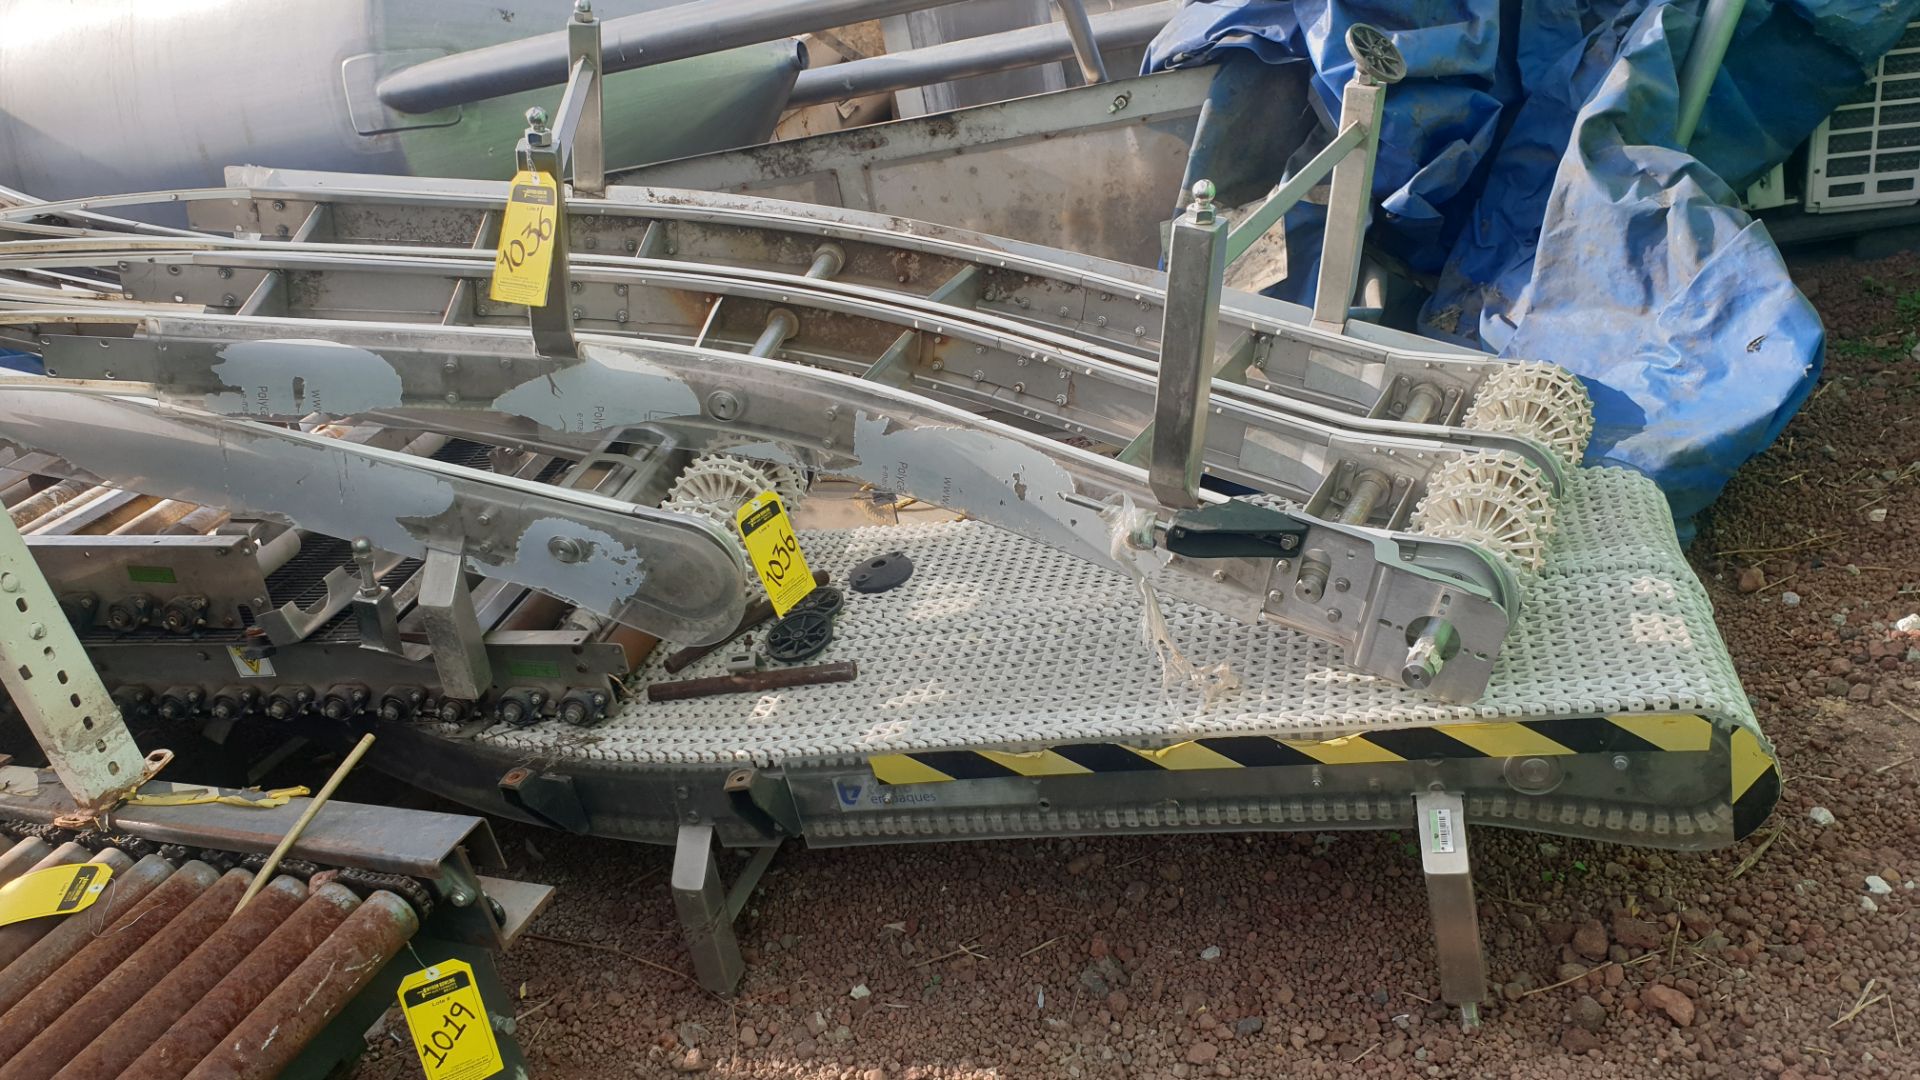 S conveyor belt batch. Please inspect - Image 3 of 9